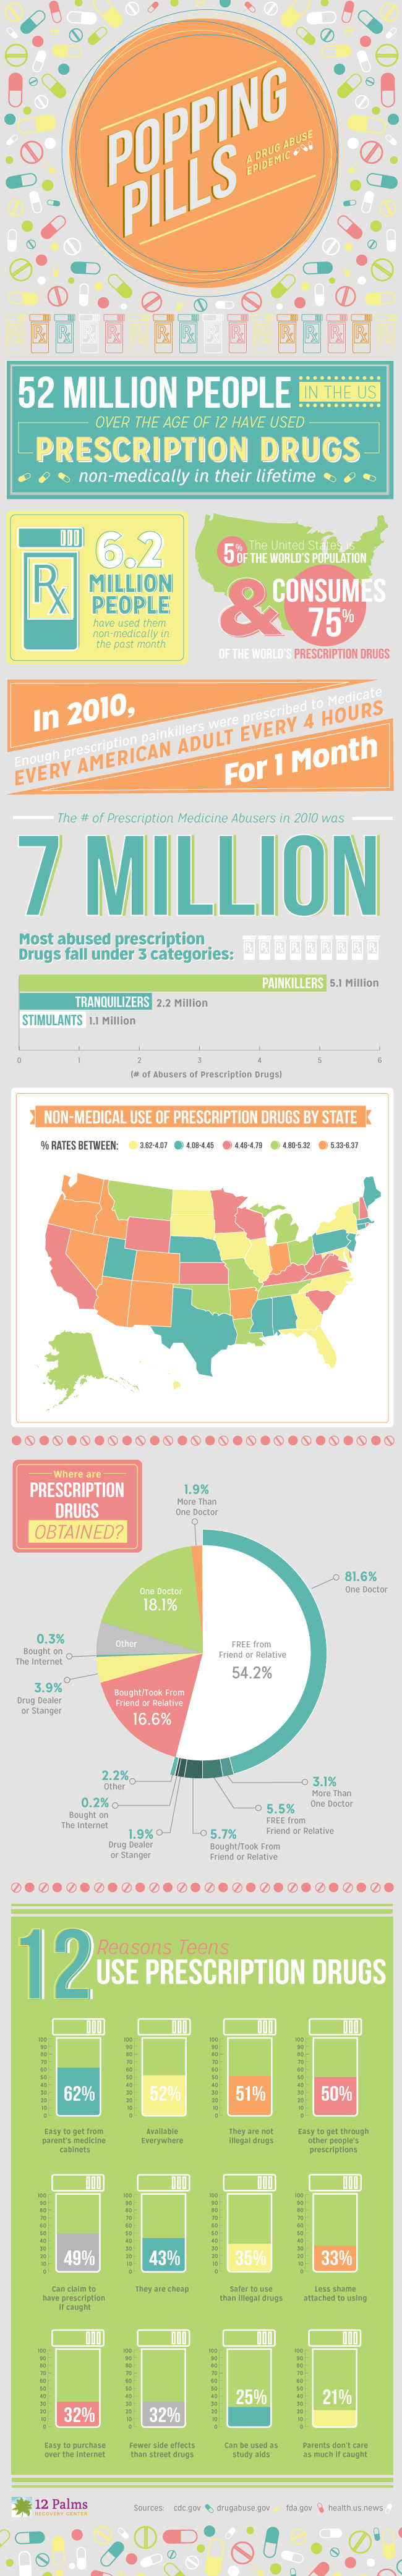 Over-prescription: An Epidemic? Infographic